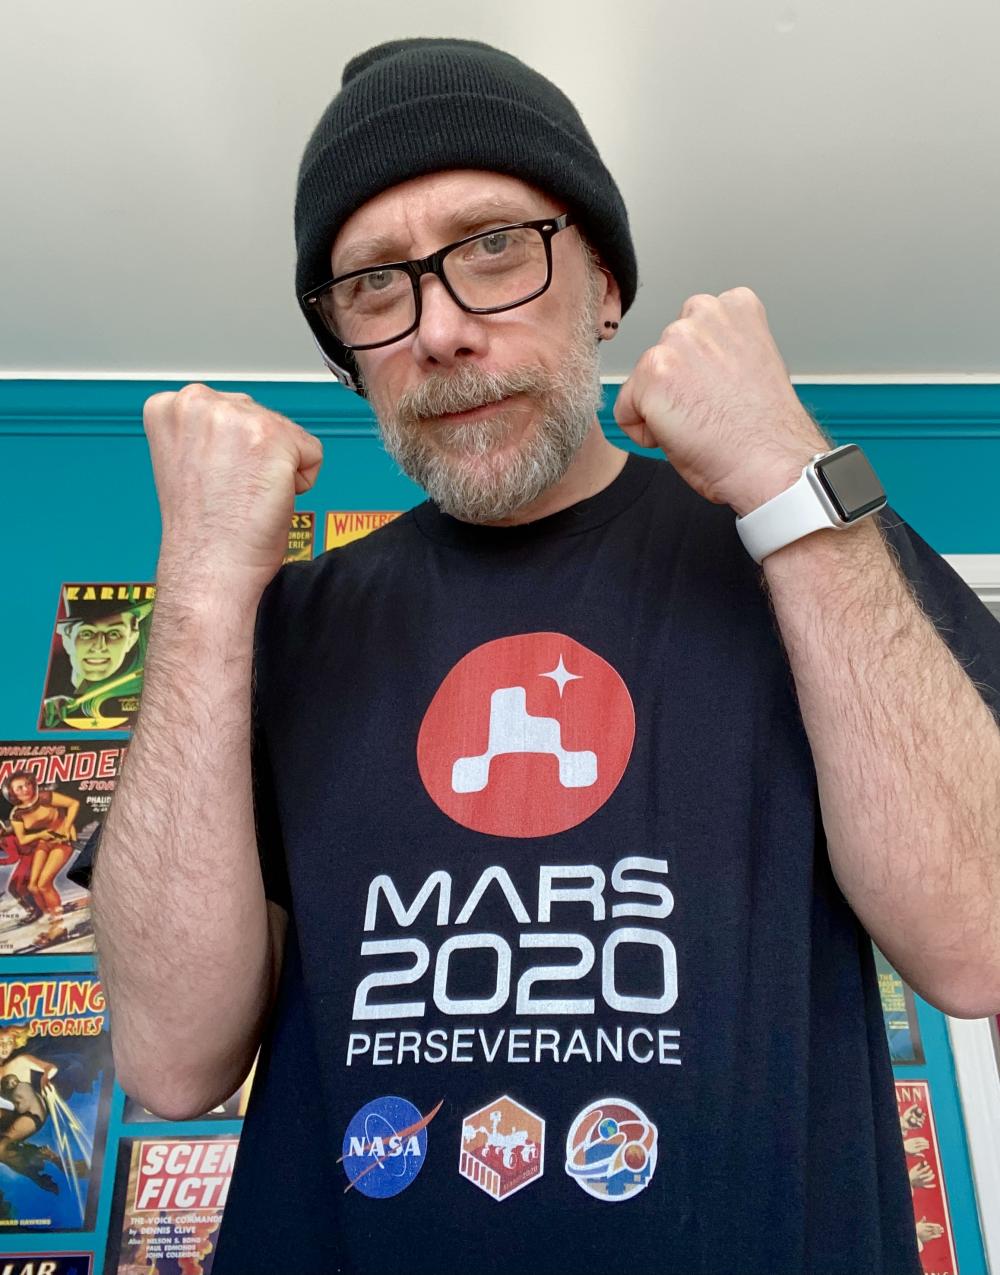 Mars 2020 Perserverance t-shirt